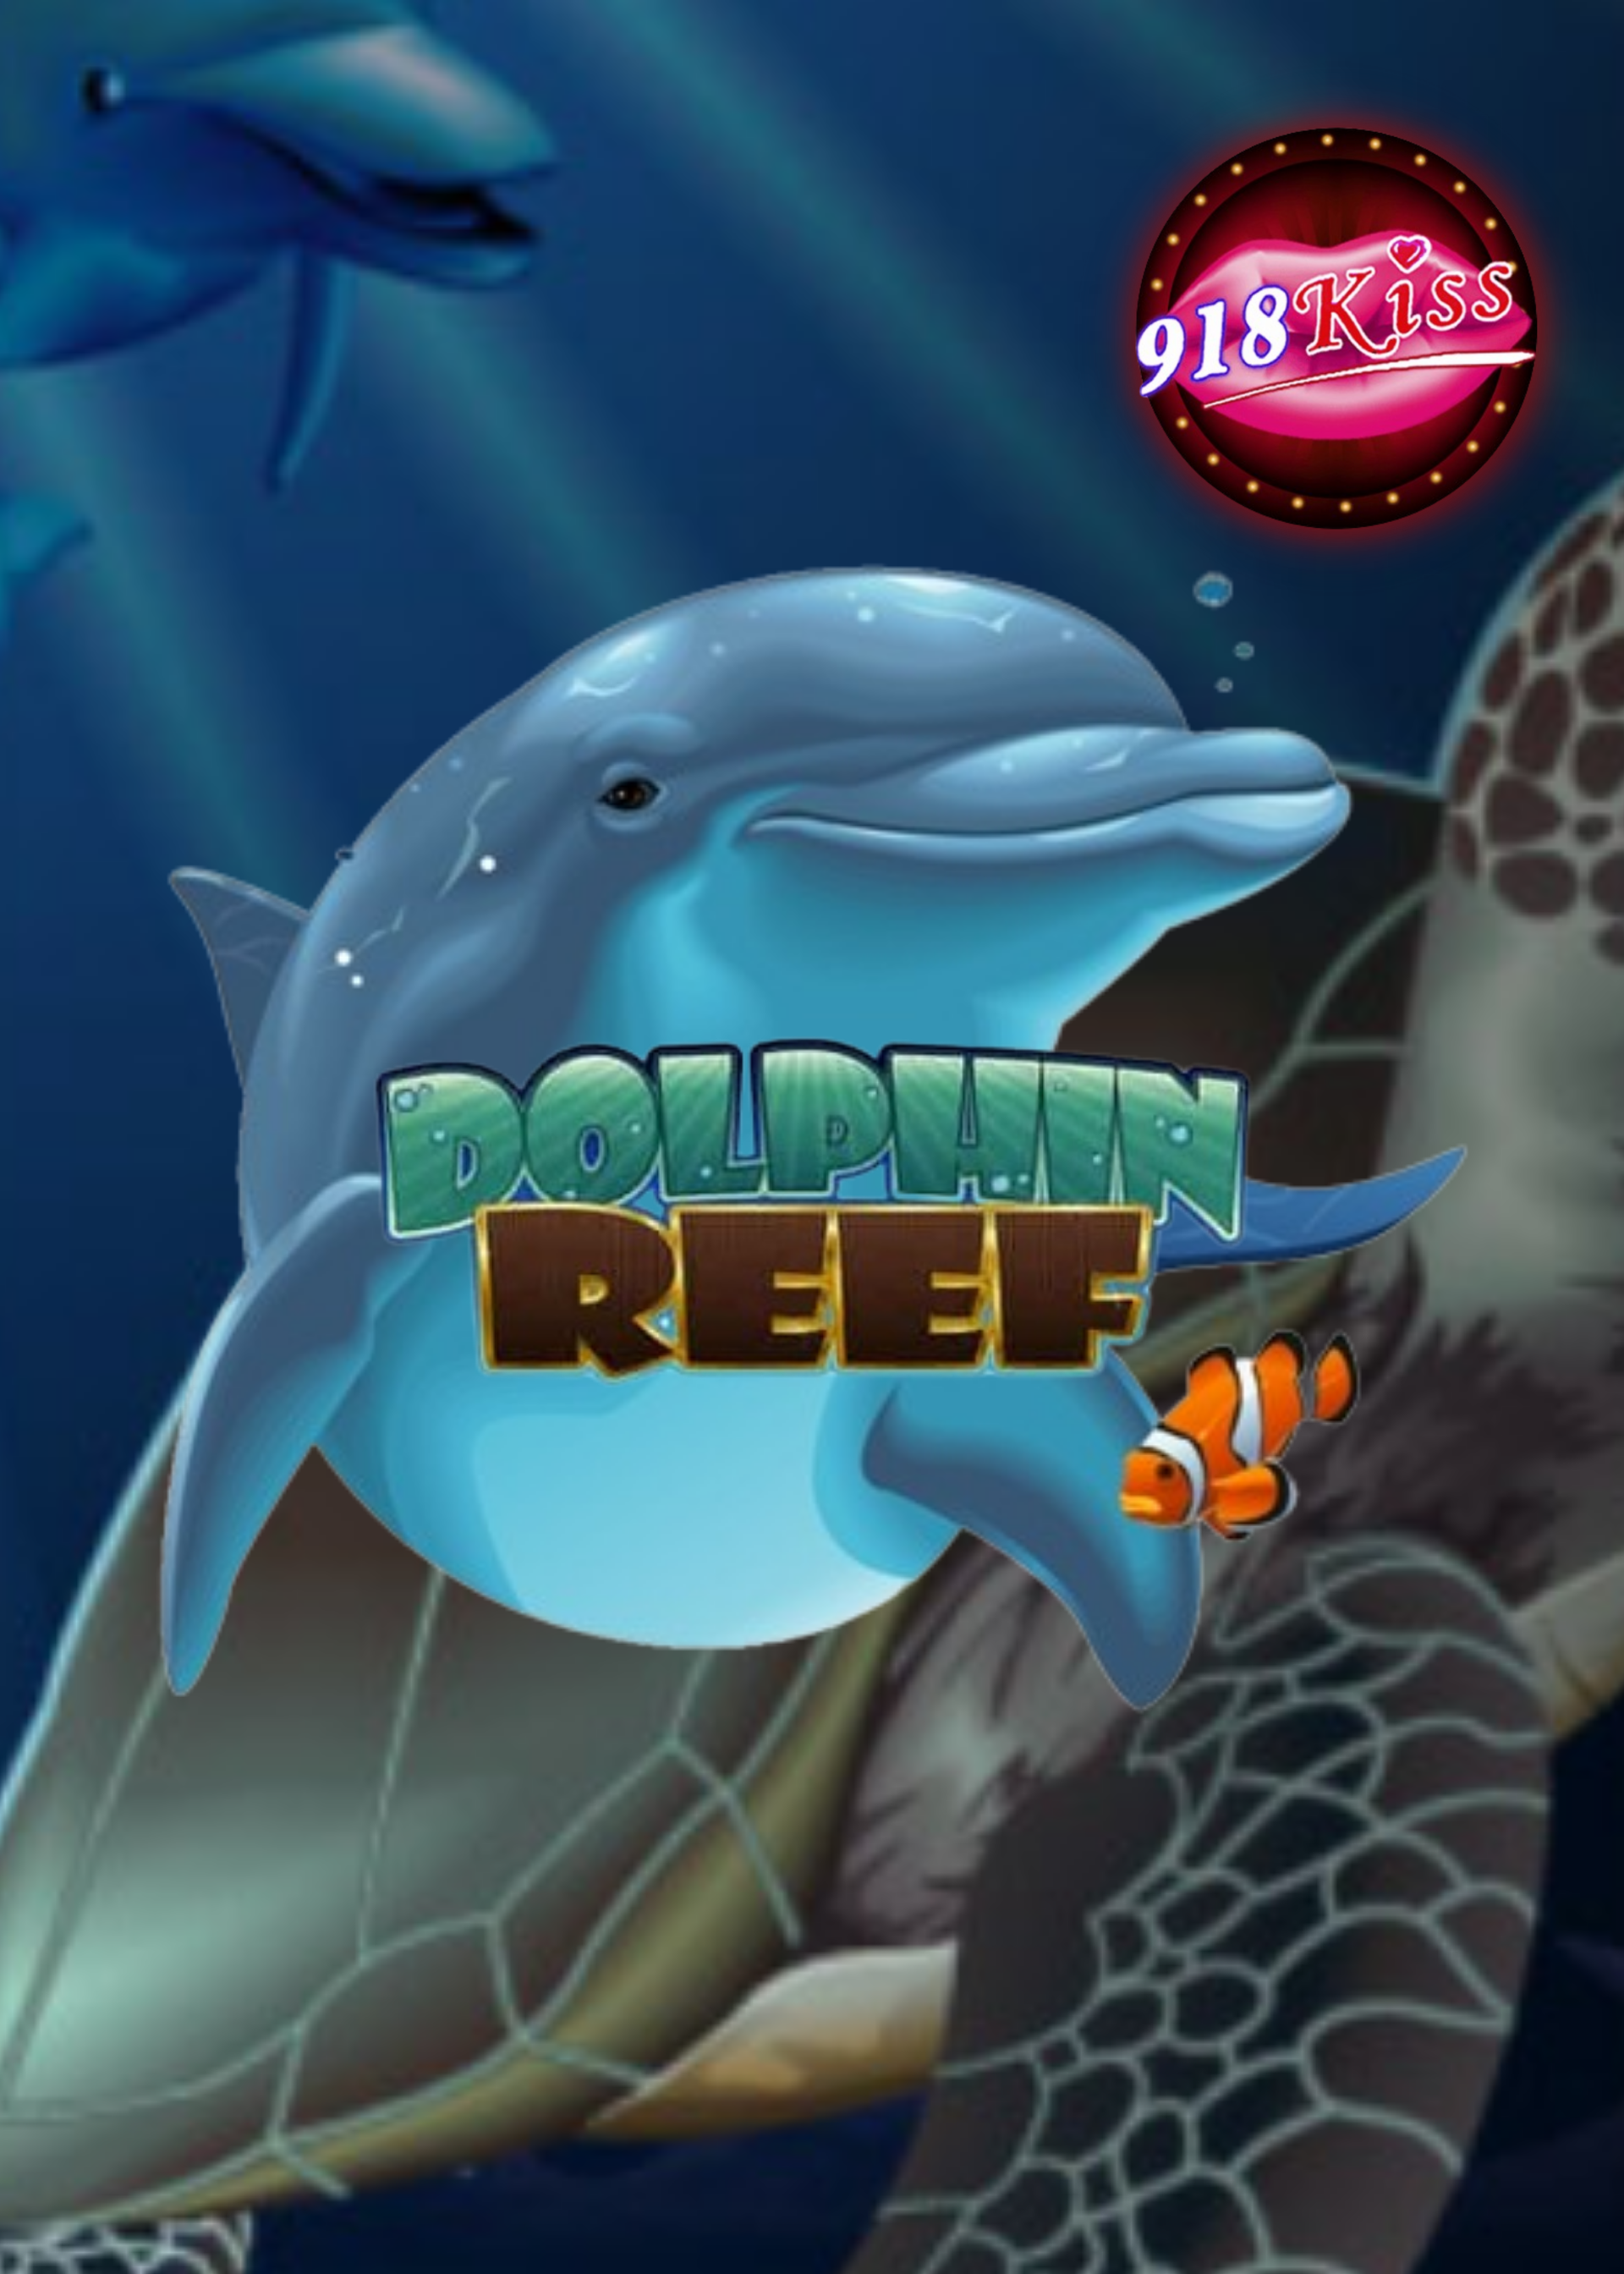 Dolphin Reef[918Kiss]